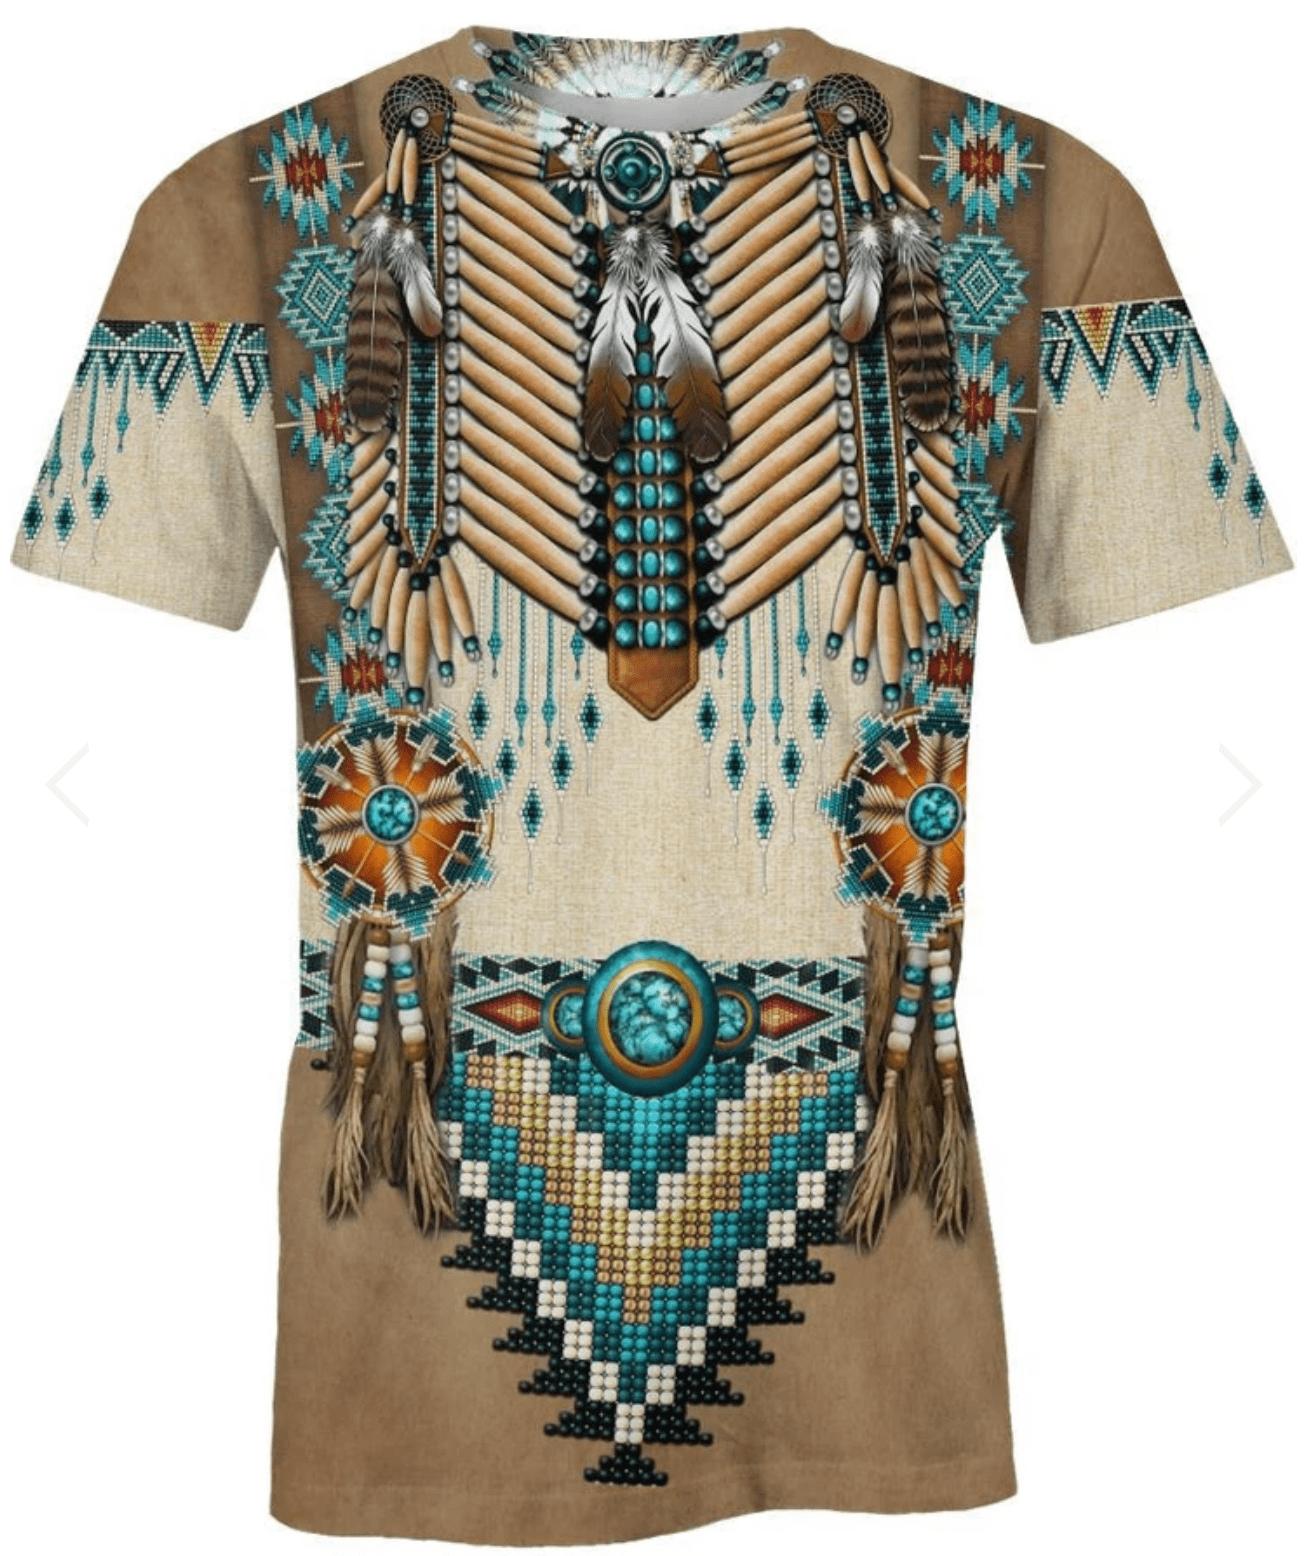 Apache warrior native american all over print tshirt